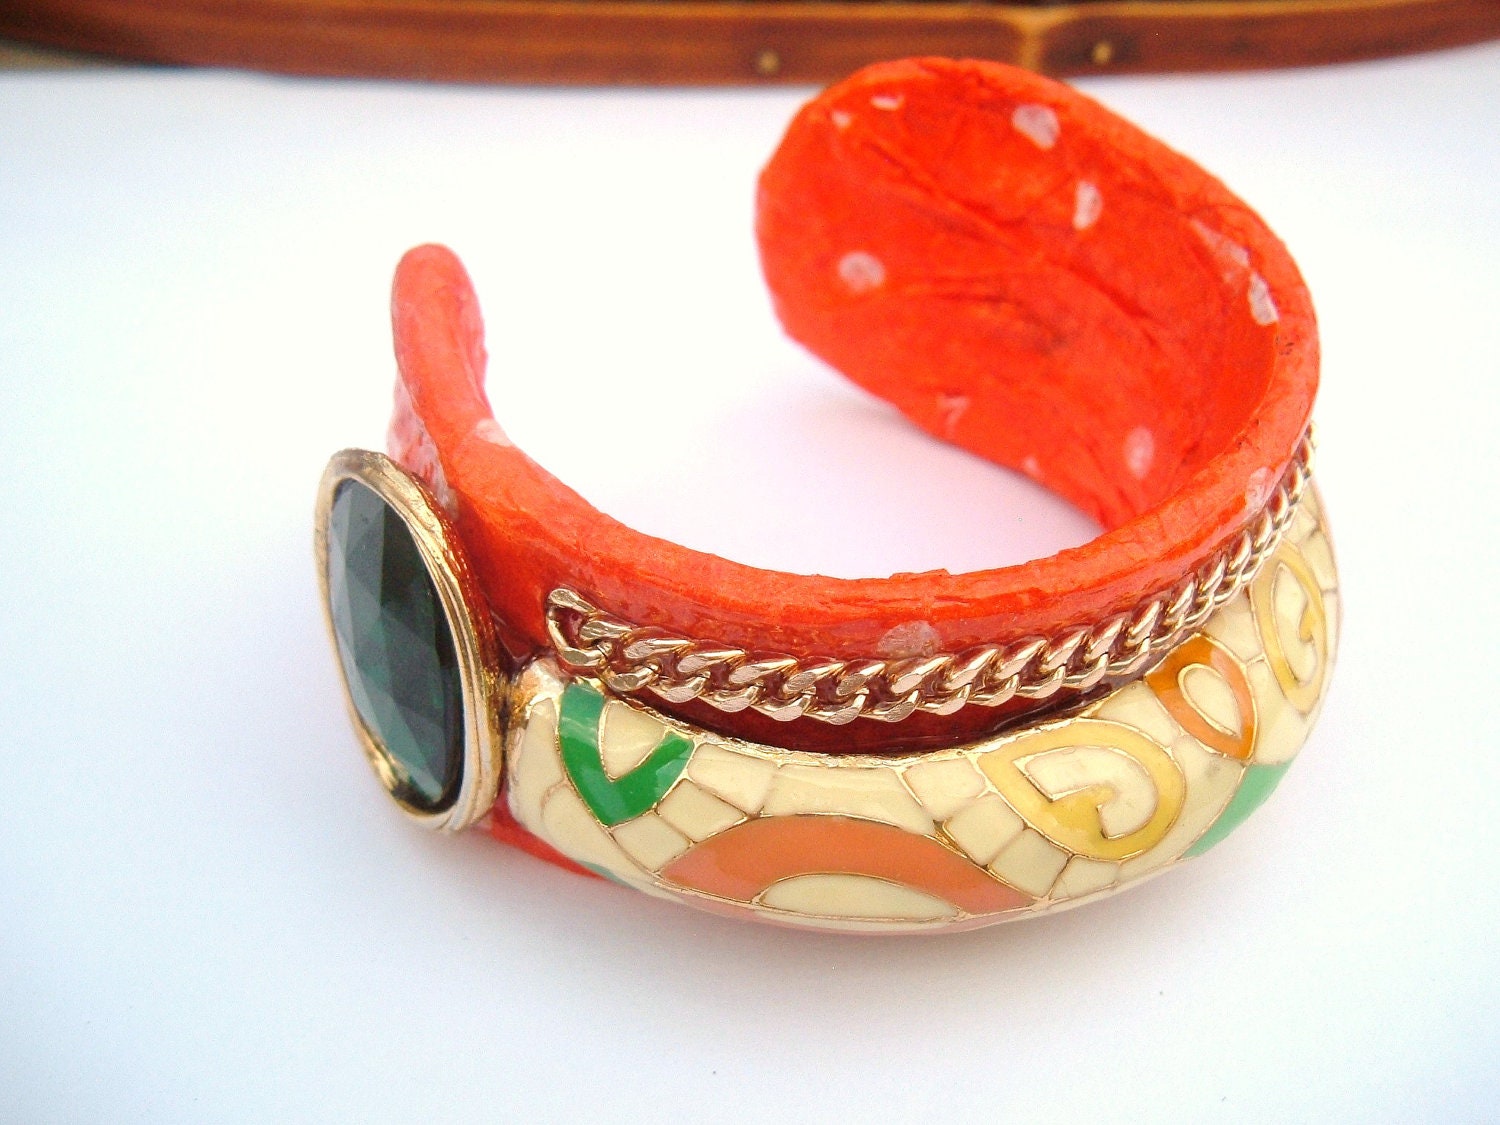 A Polkadot Orange Decoupage Cuff Bracelet vintage recycle